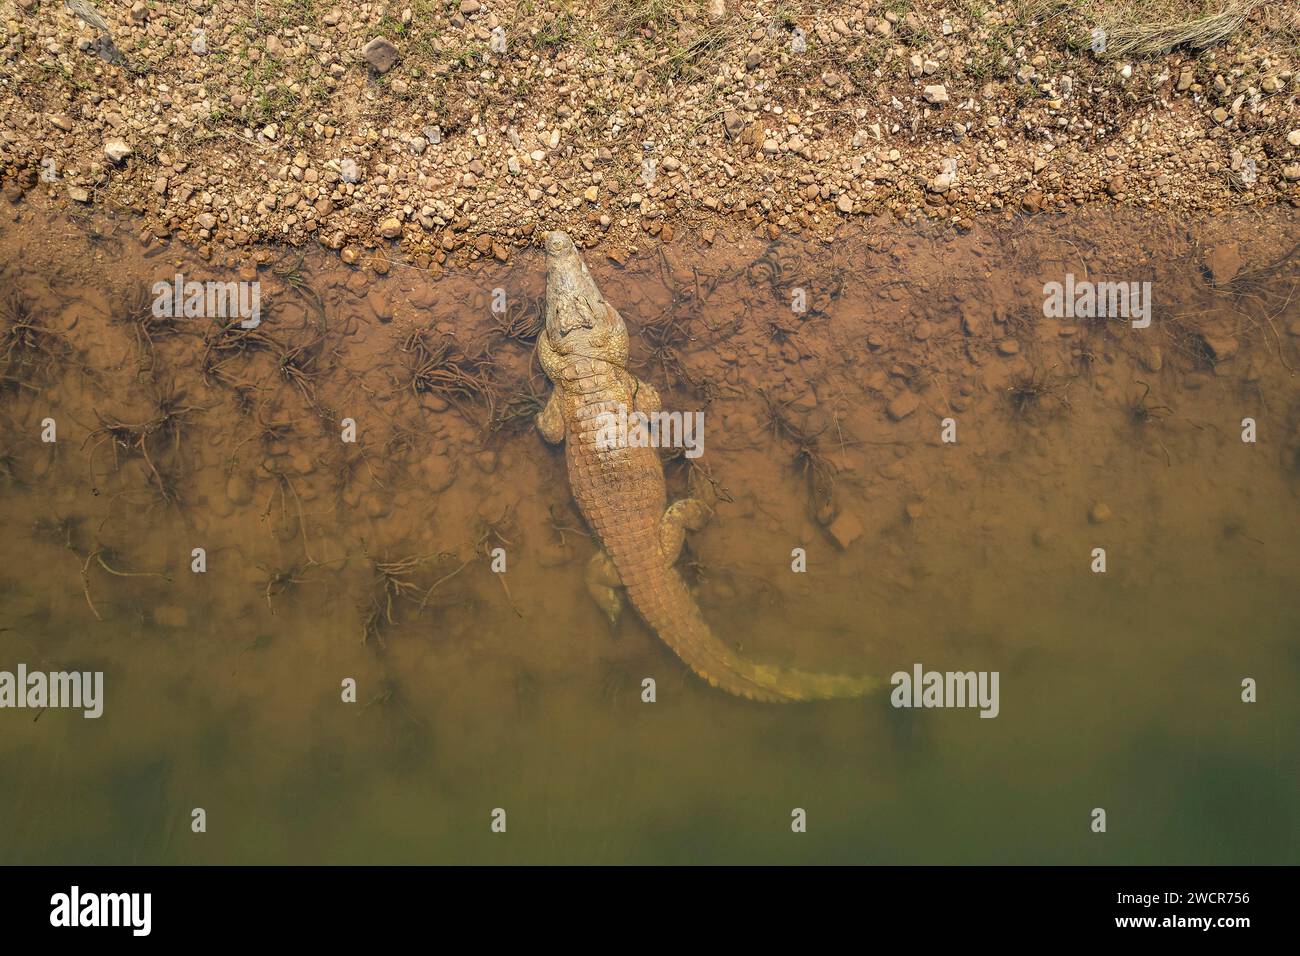 A large Nile Crocodile, Crocodylus niloticus, is seen from an aerial drone shot in Zimbabwe's Lake Kariba. Stock Photo